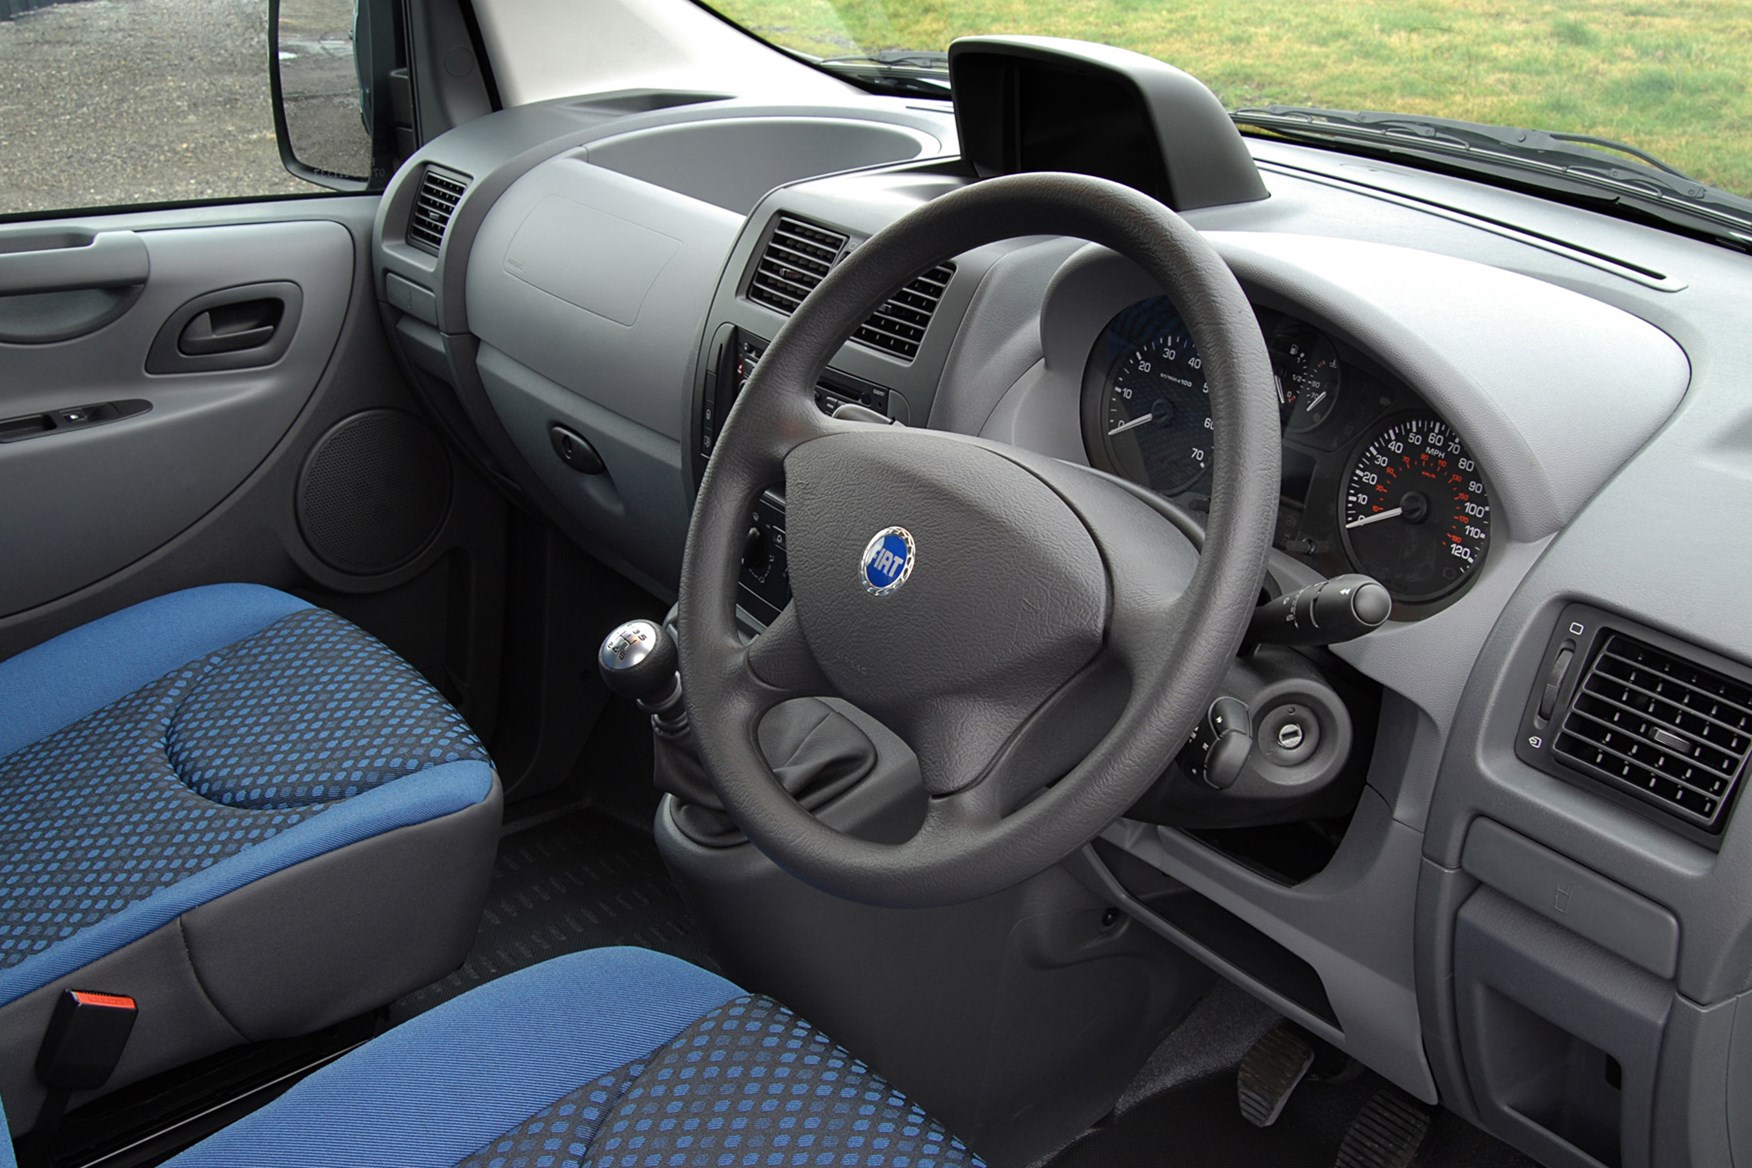 Fiat Scudo 2007-2016 review on Parkers Vans - interior